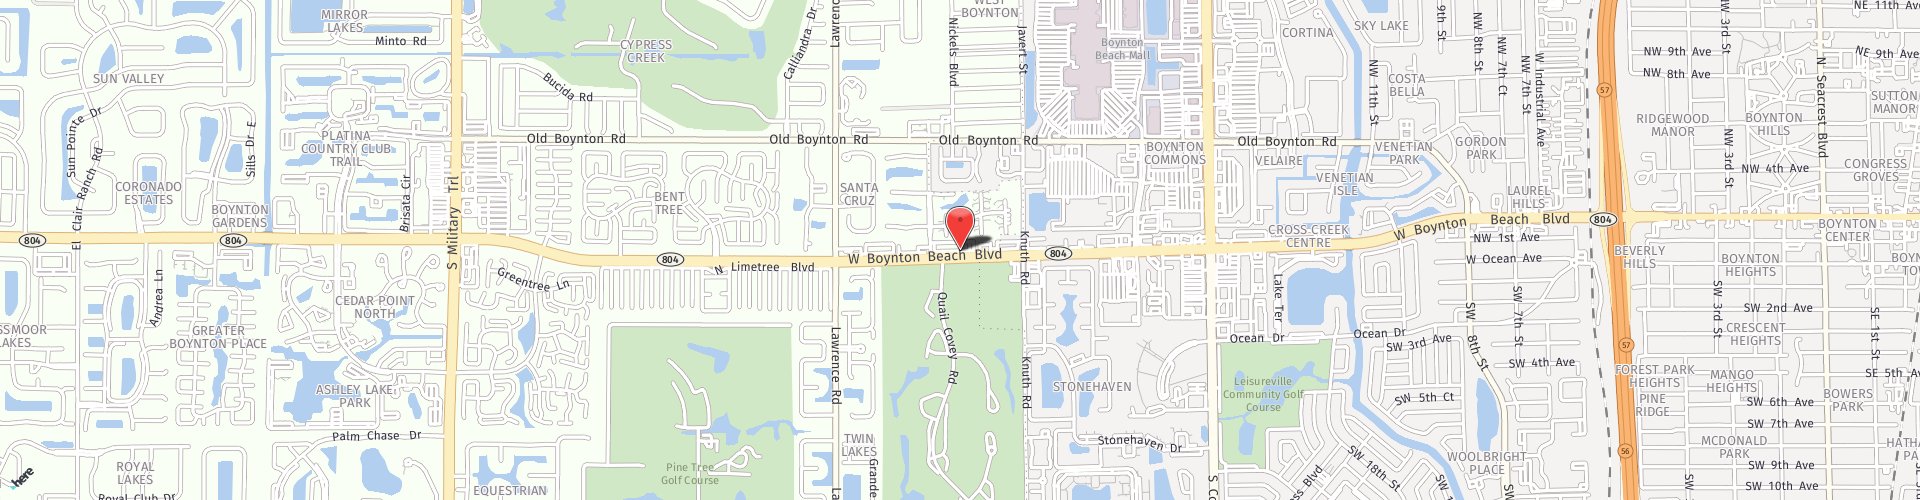 Location Map: 3695 W. Boynton Beach Blvd. Boynton Beach, FL 33436